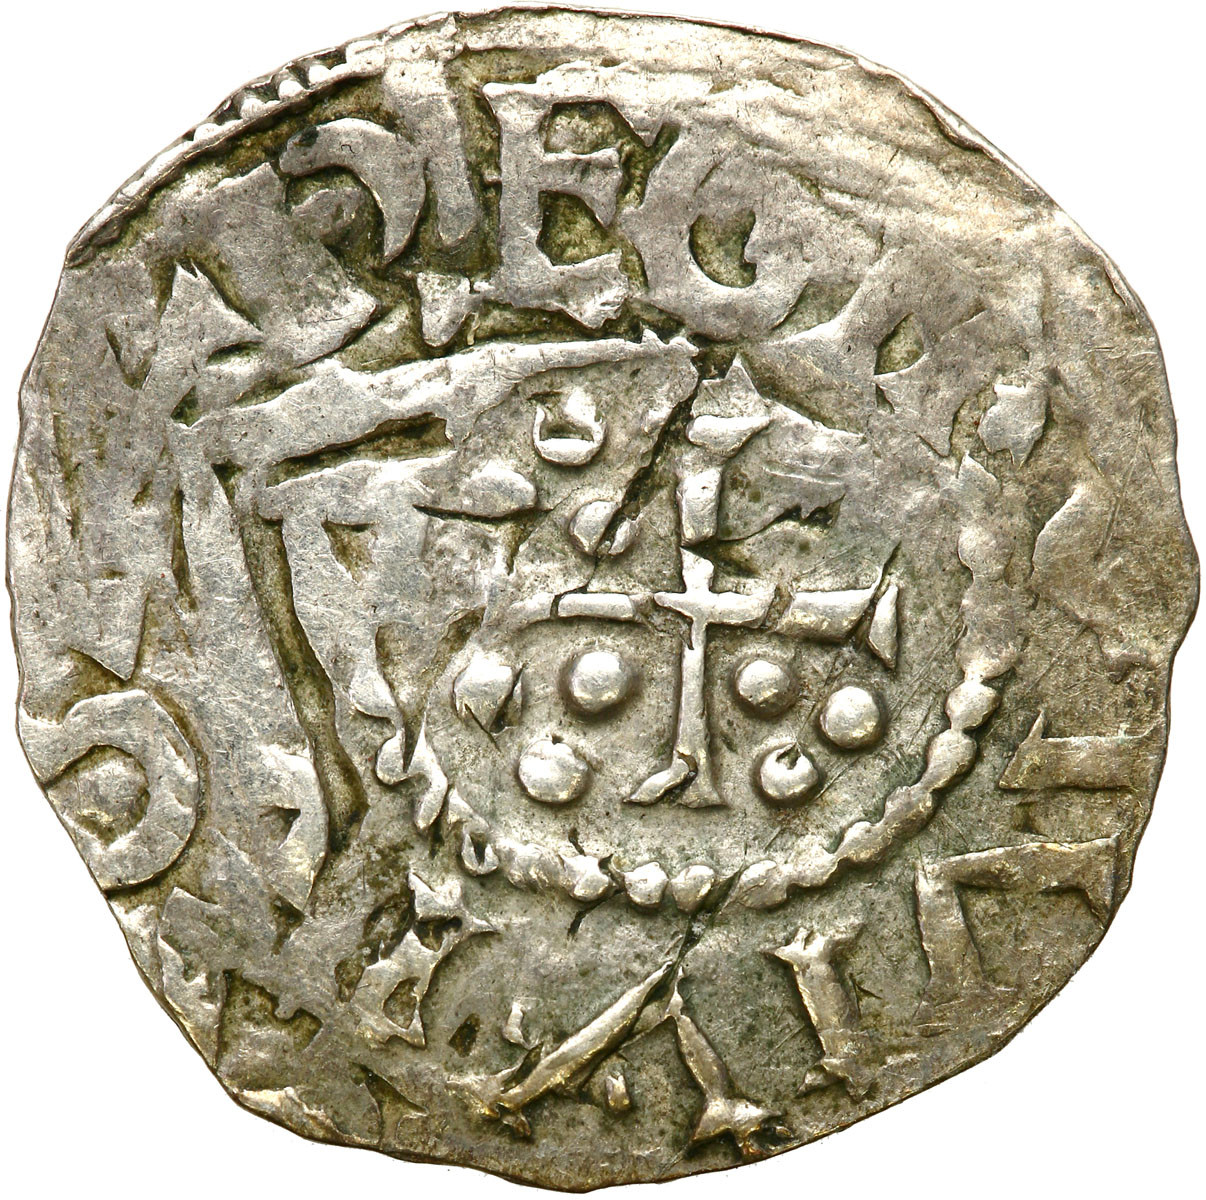 Niemcy, Bawaria - Ratyzbona. Ks. Henryk II Kłótnik 955-976 / 985-995. Denar